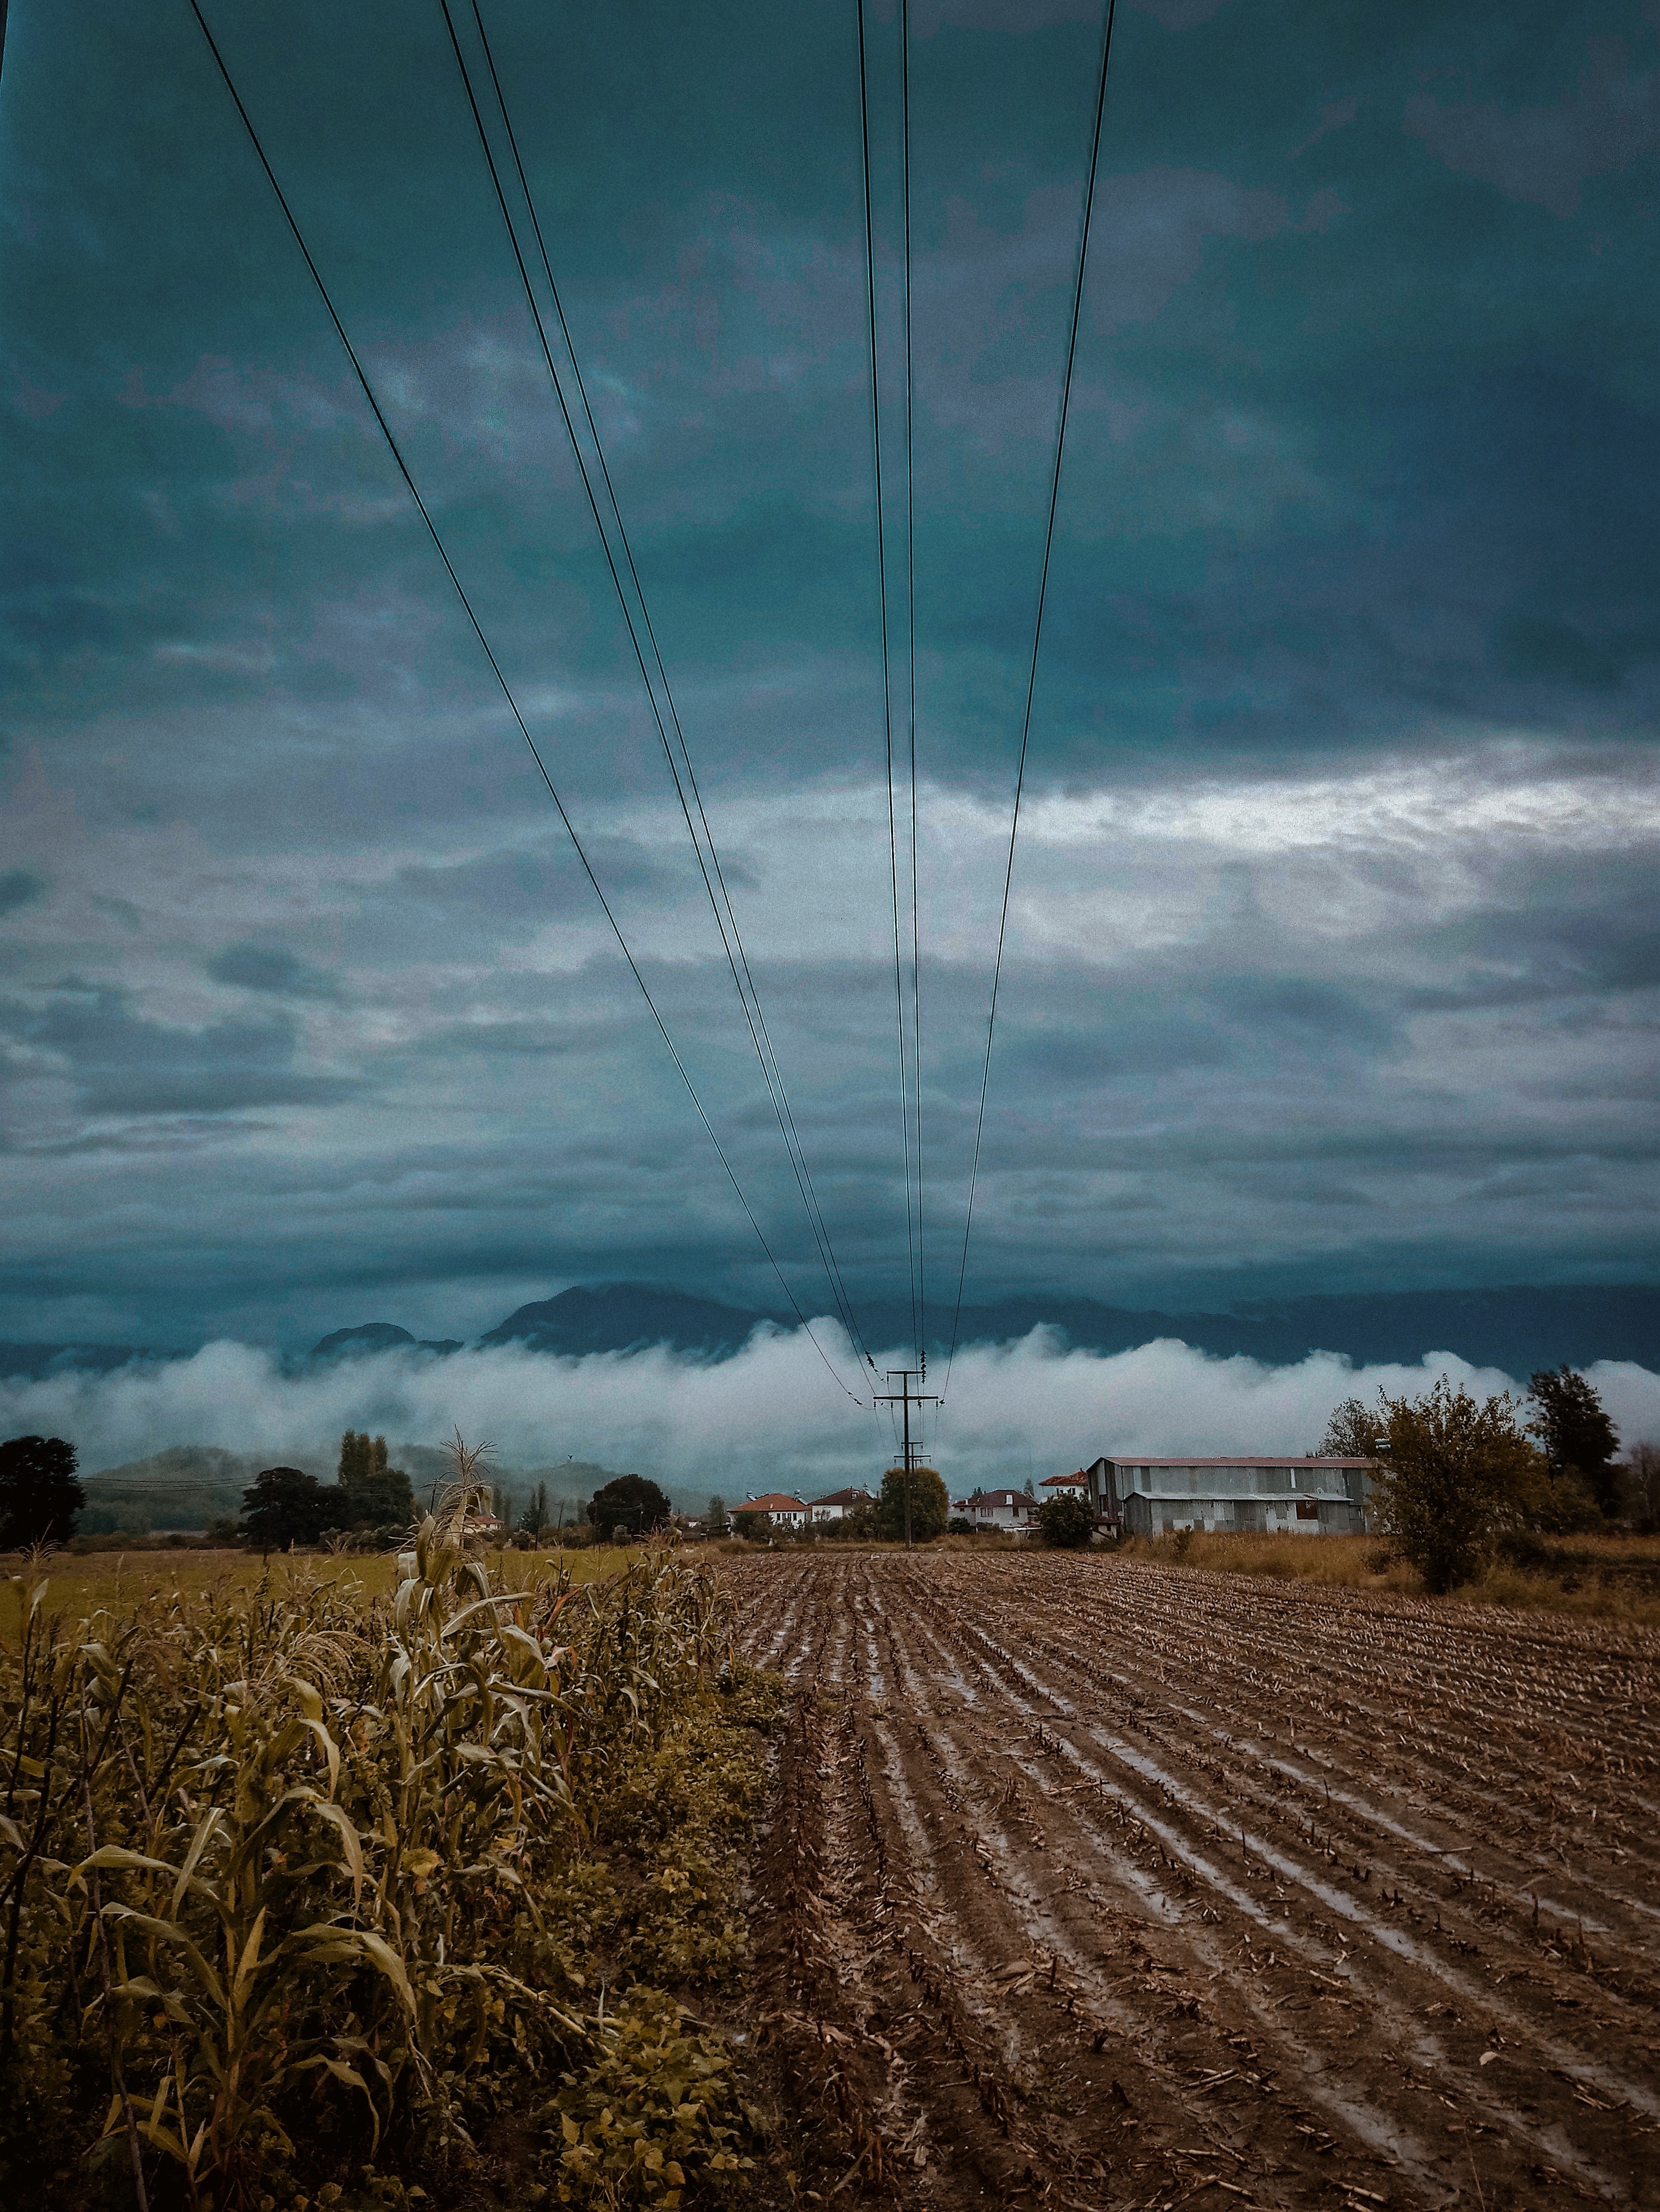 Cornfield near plain field under gray cloudy sky photo